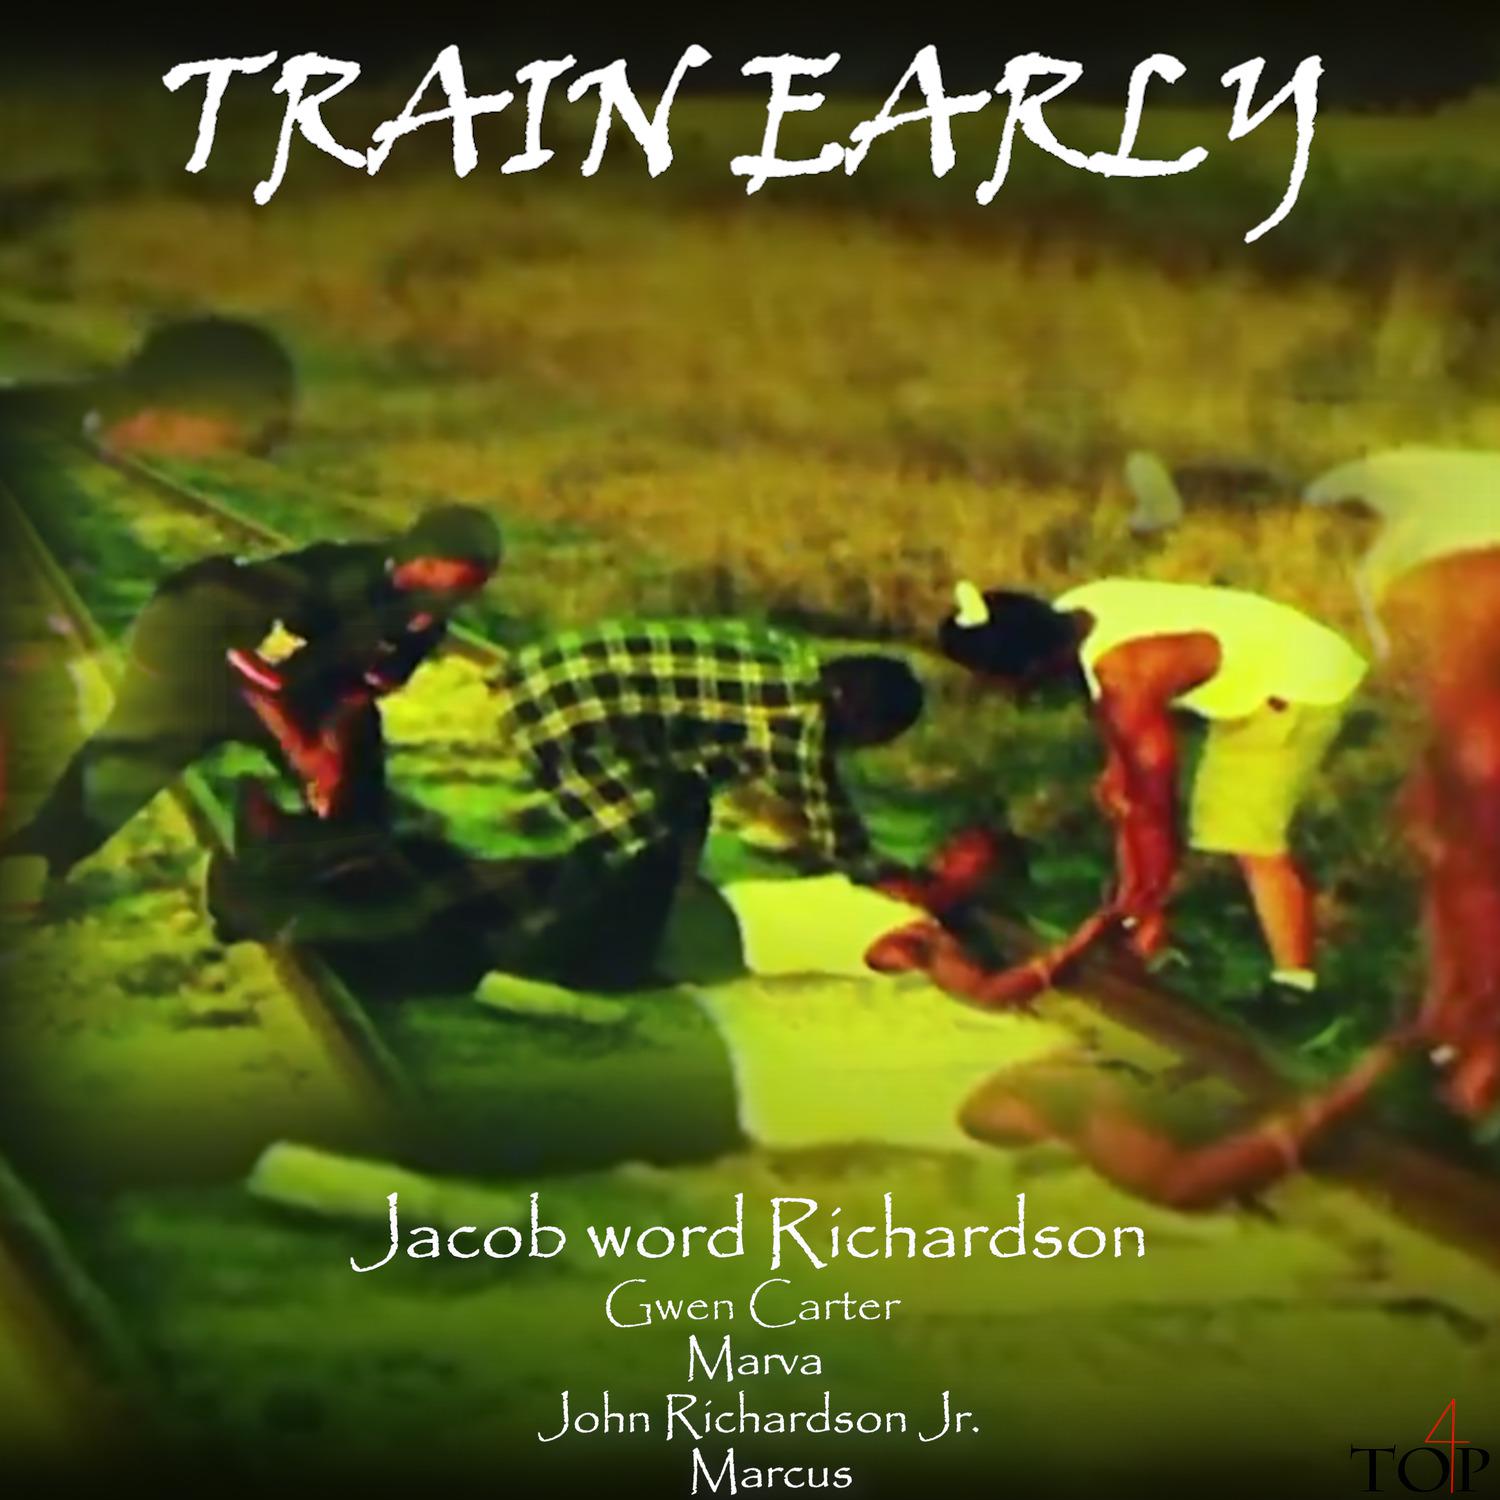 Jacob word Richardson - Train Early